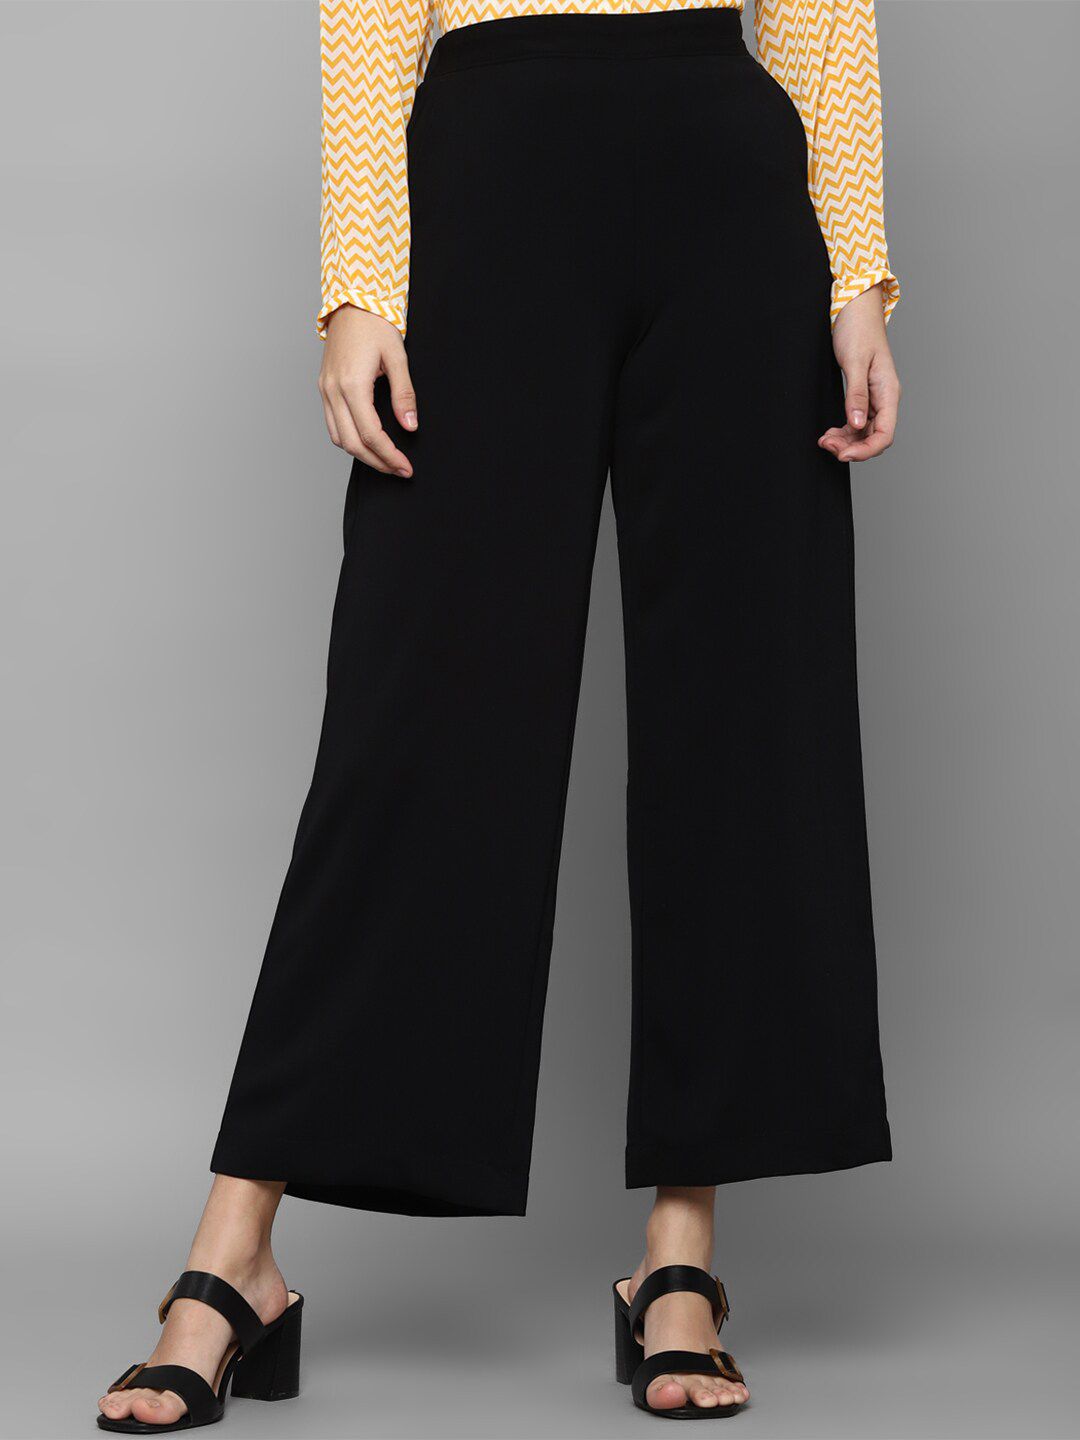 Allen Solly Woman Trousers  Buy Allen Solly Woman Trousers Online in India